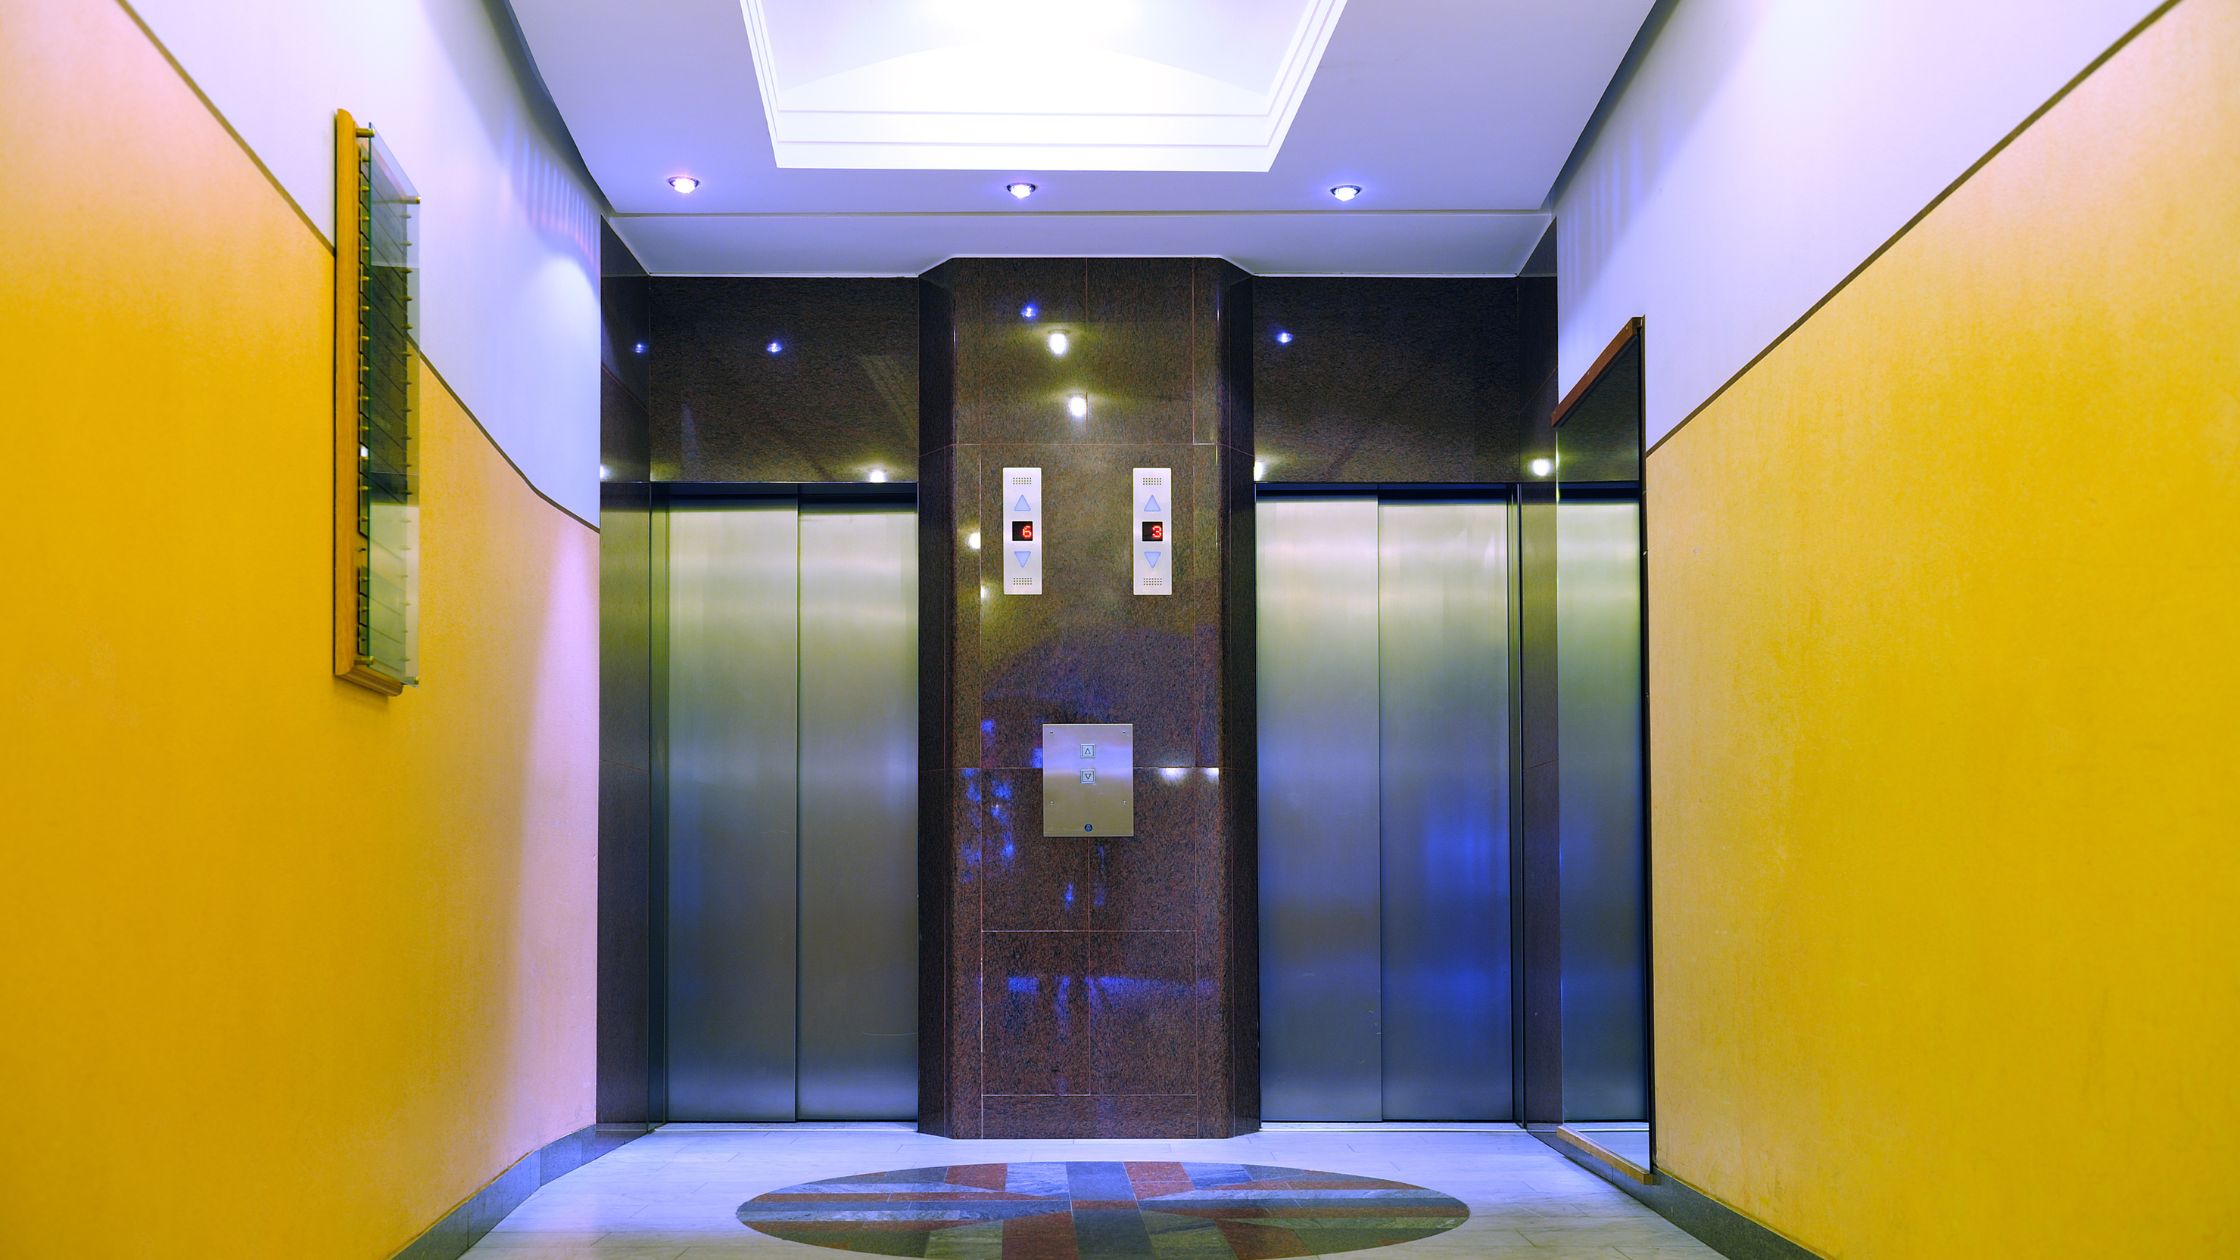 Elevator modernization